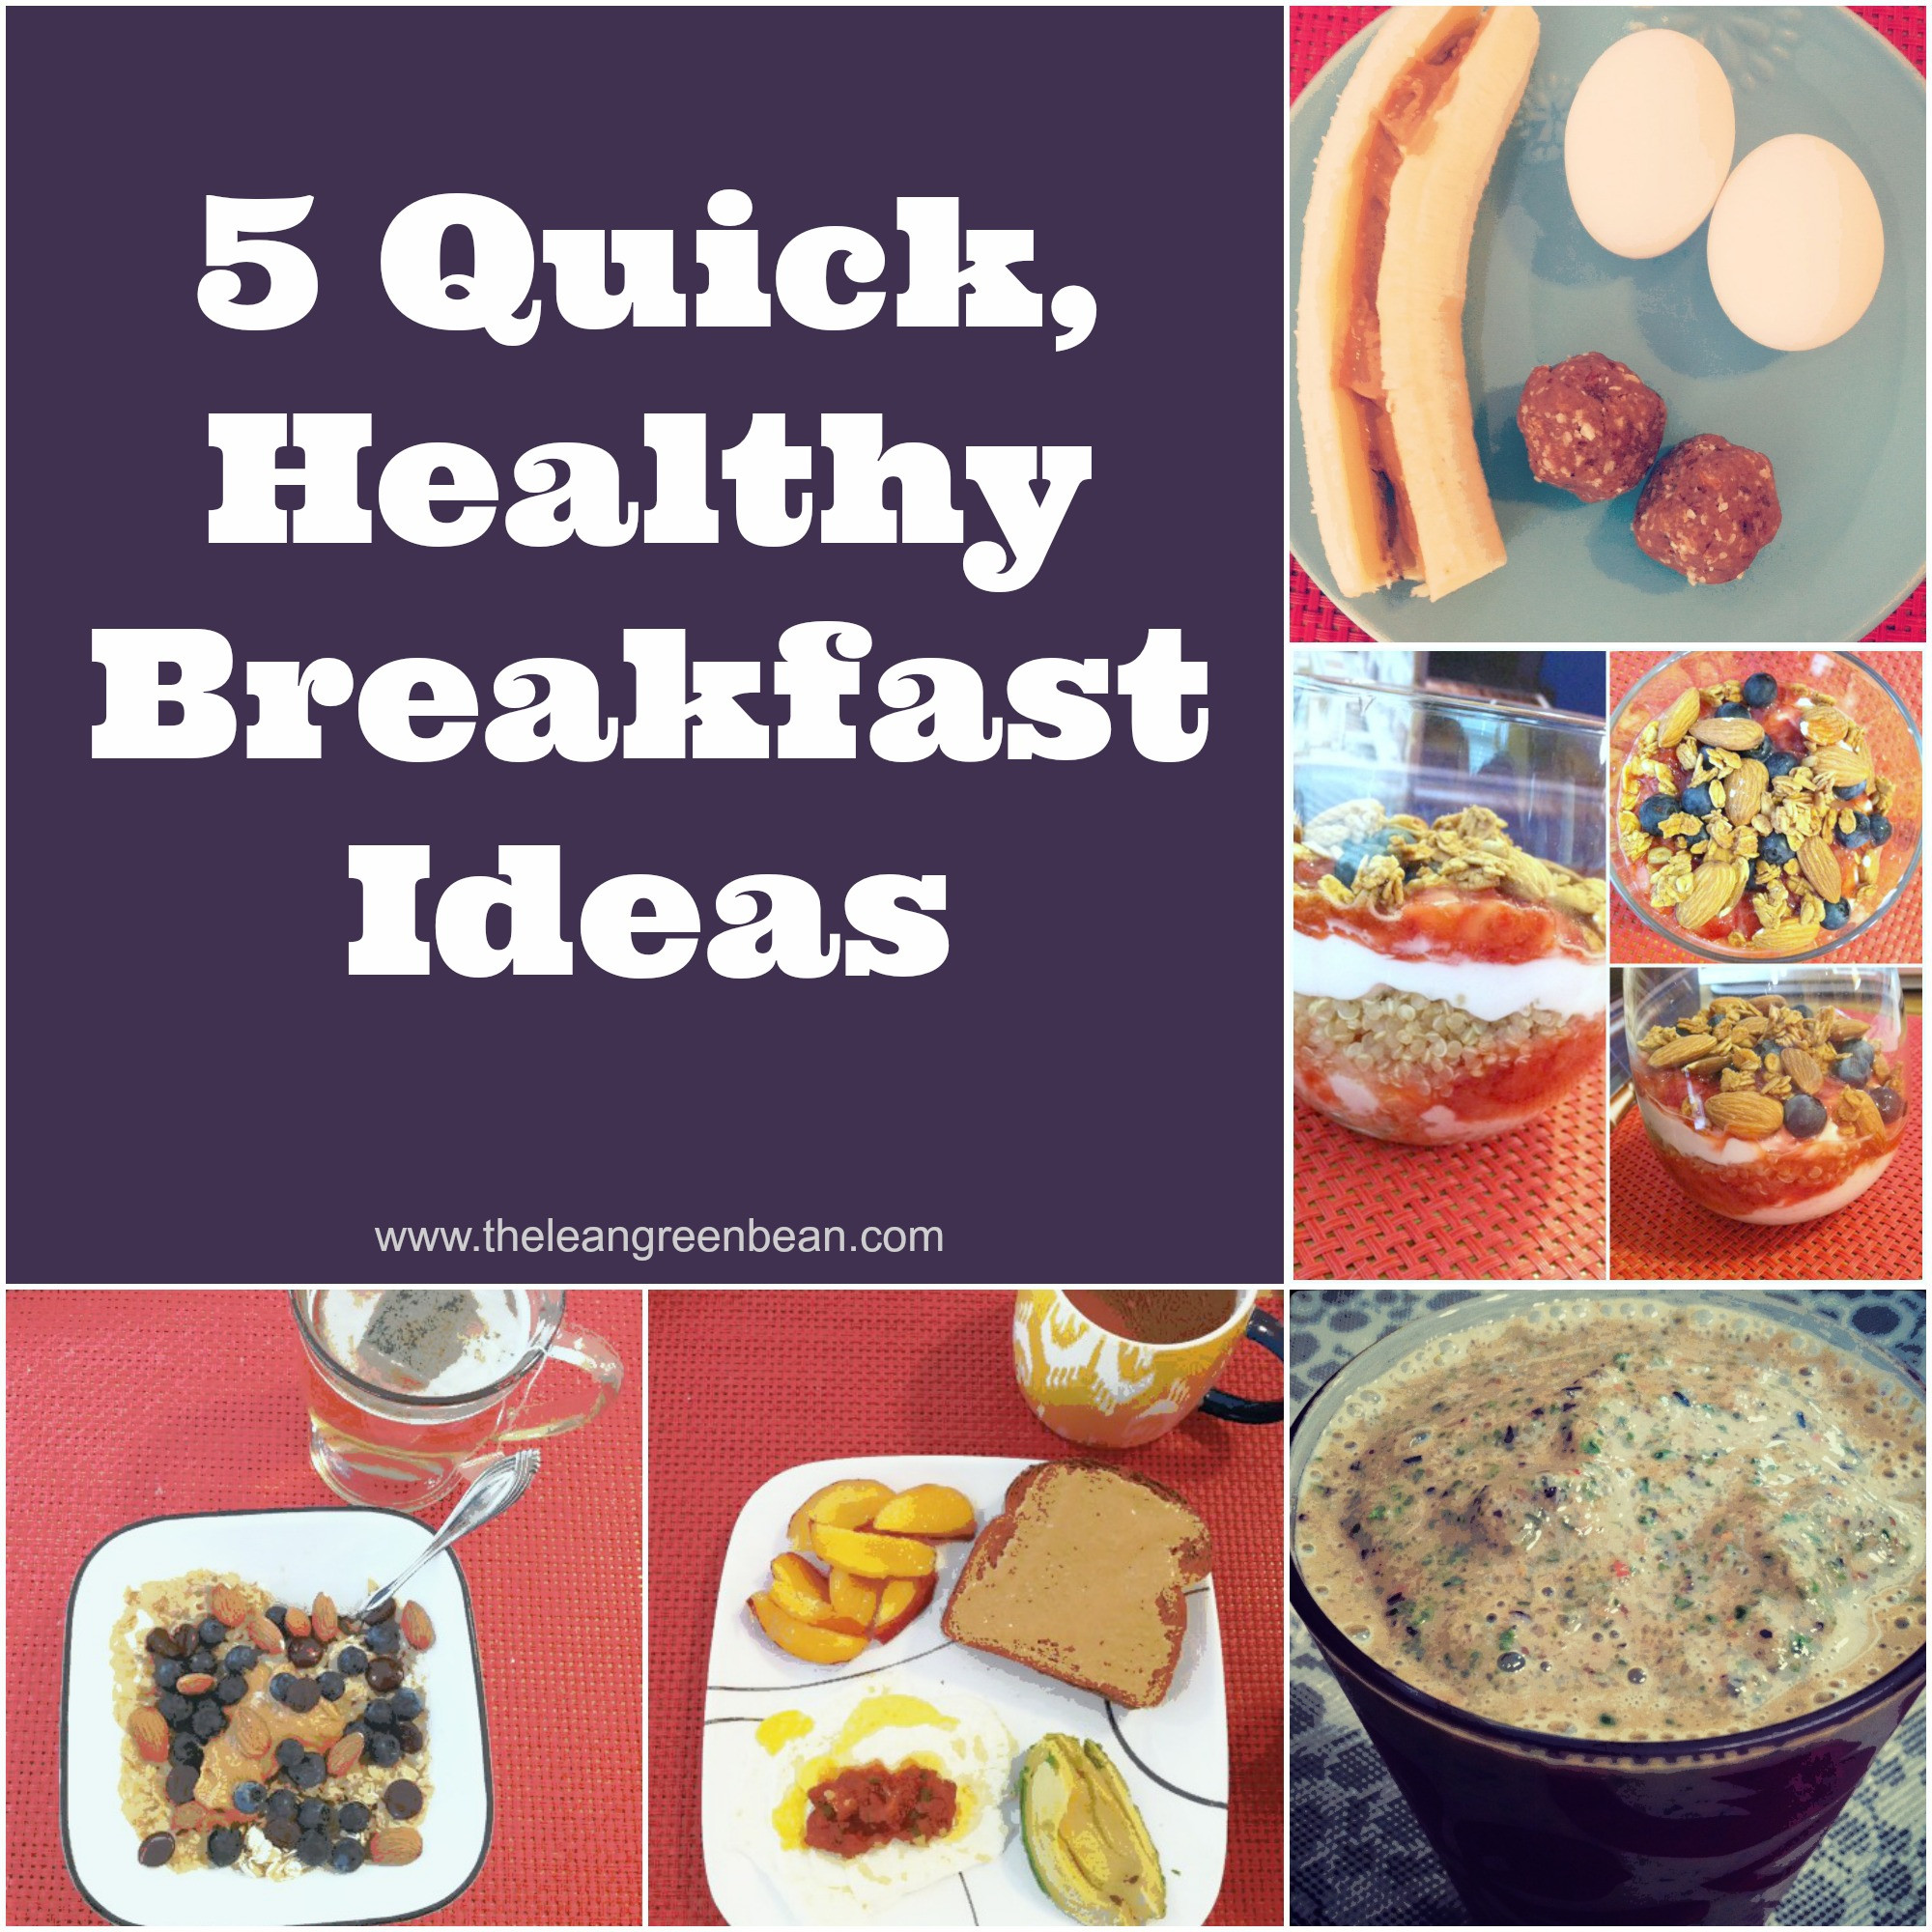 Healthy Fast Breakfast
 5 Quick Healthy Breakfast Ideas from a Registered Dietitian